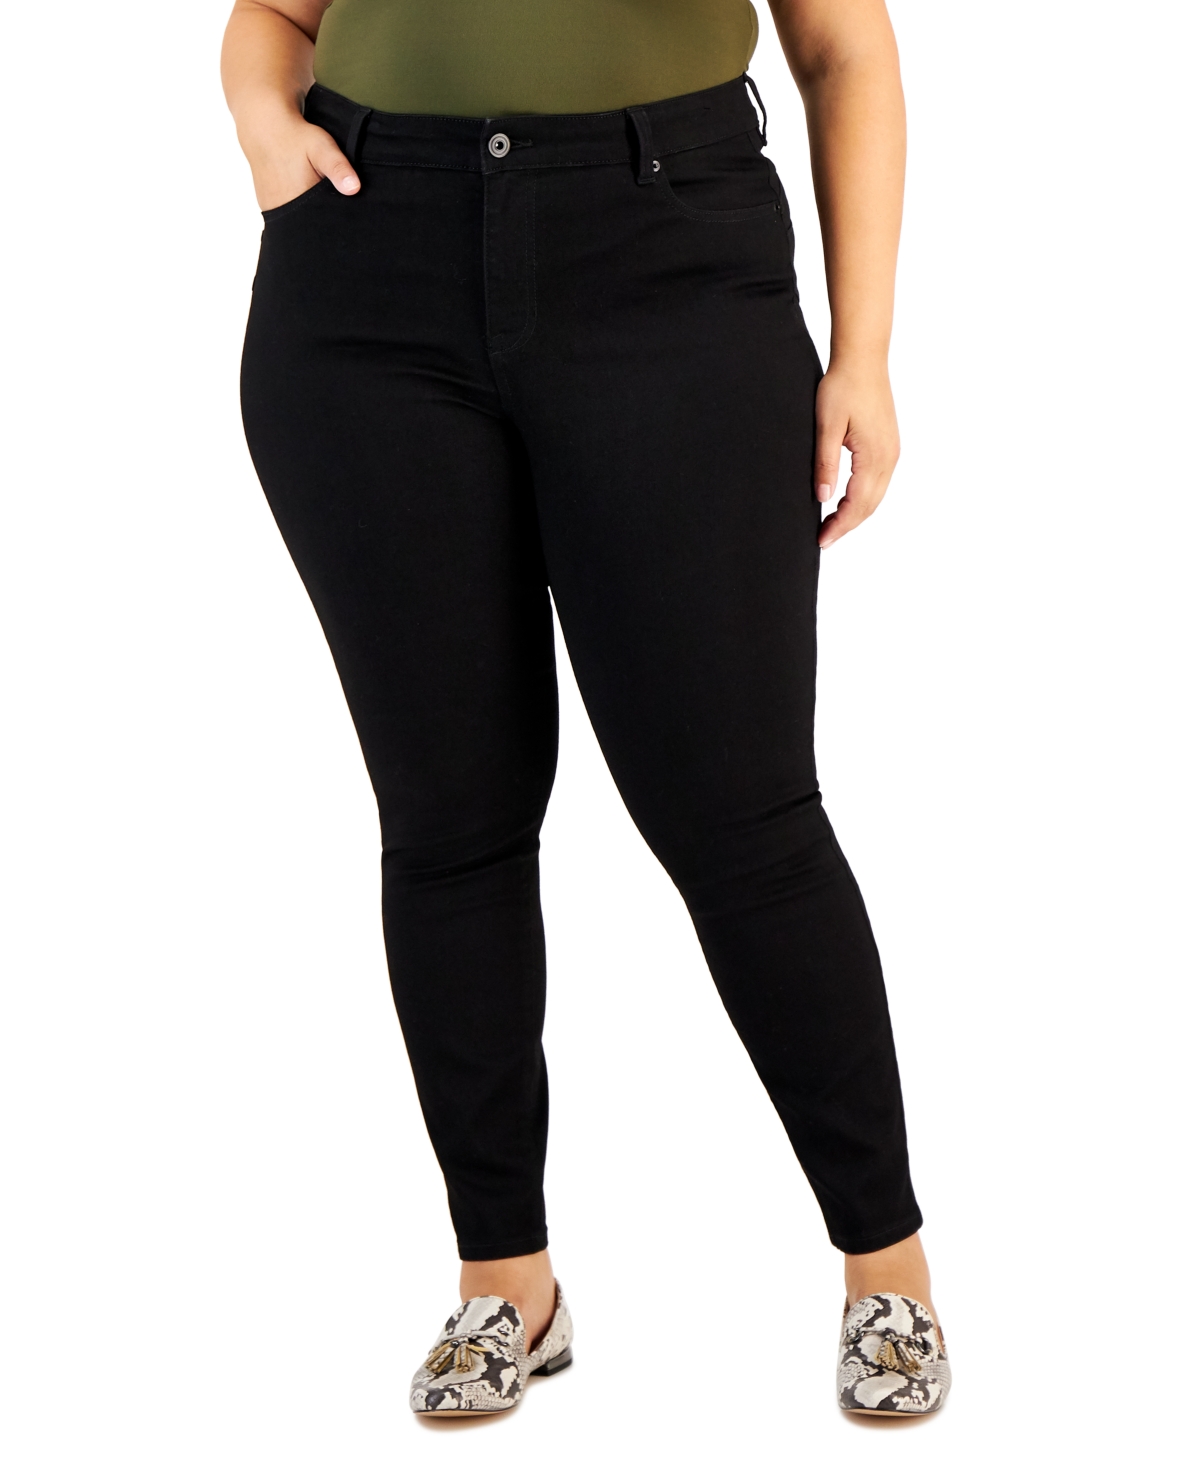 Trendy Plus Size Sculpted Skinny Jeans - Black